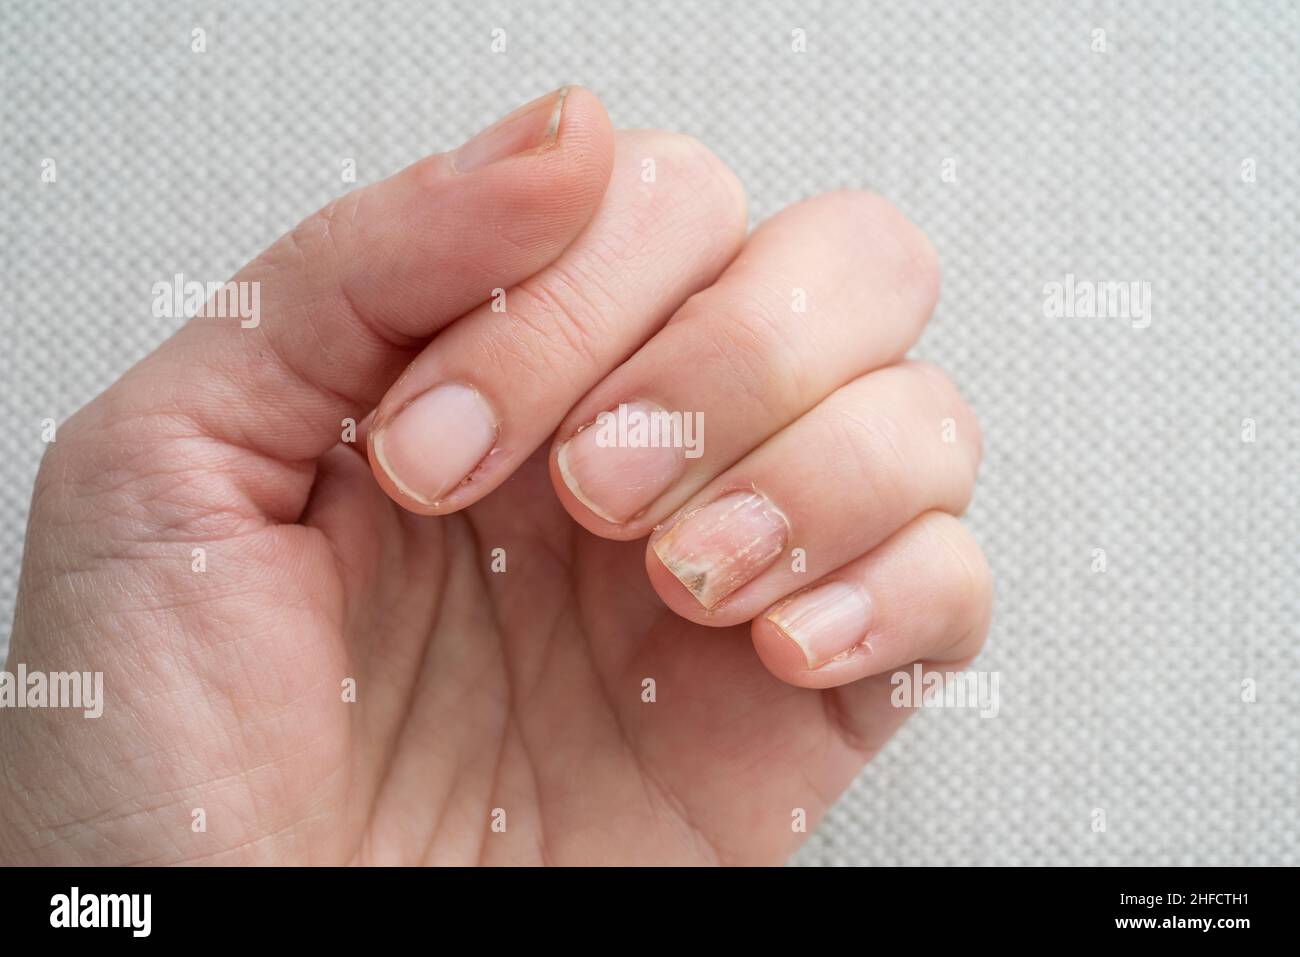 Is this fingernail fungus ? : r/NailFungus